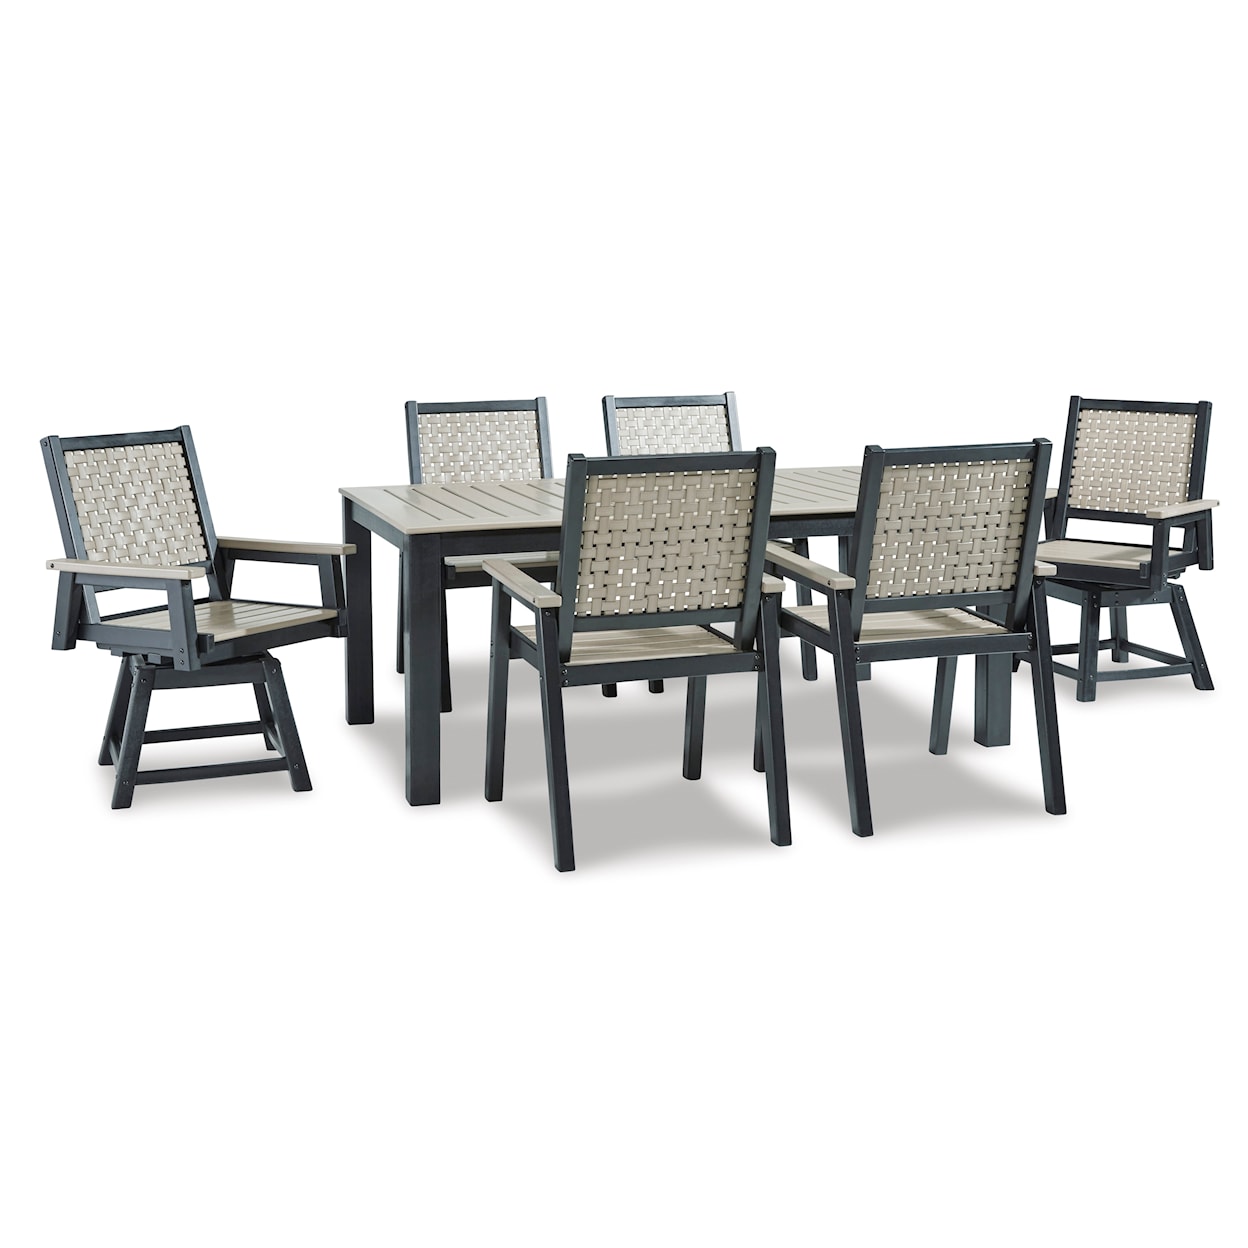 Ashley Furniture Signature Design Mount Valley Outdoor Dining Set